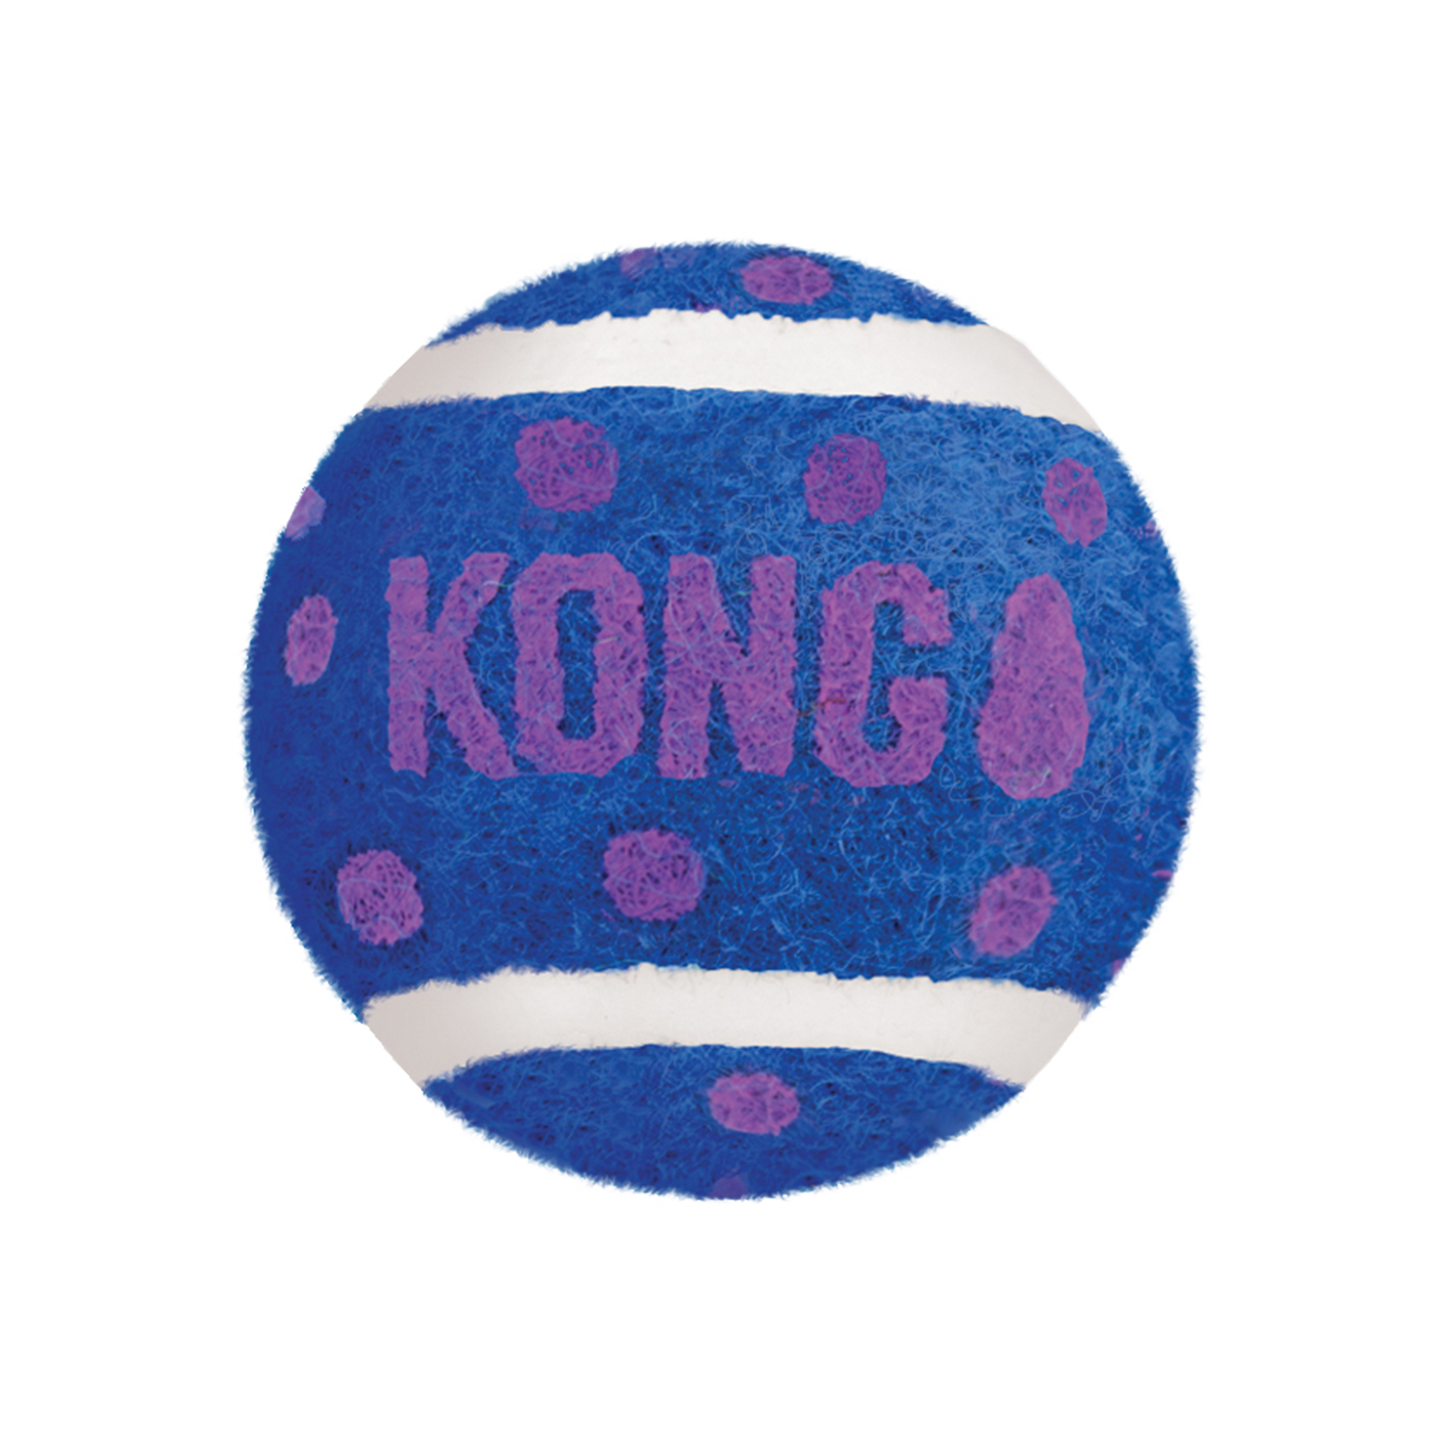 kong ball cat toy single image